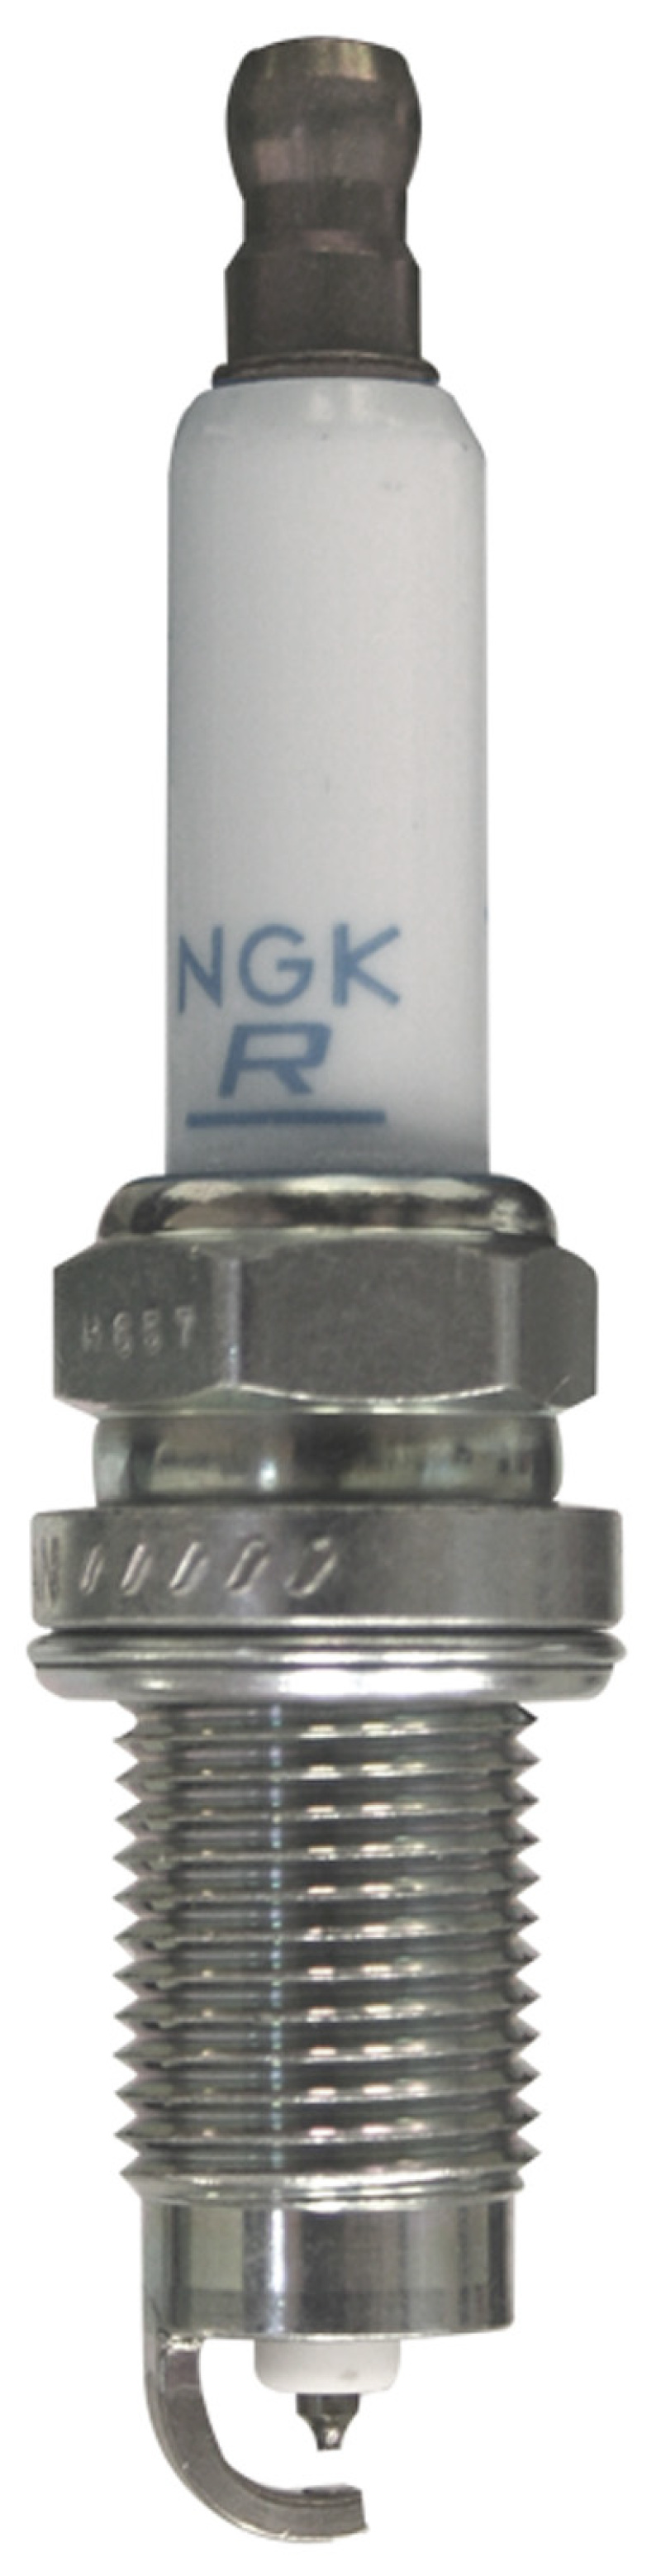 NGK Extra Long Life Double Platinum Spark Plug Box of 4 (PZFR6J-11) - 3586